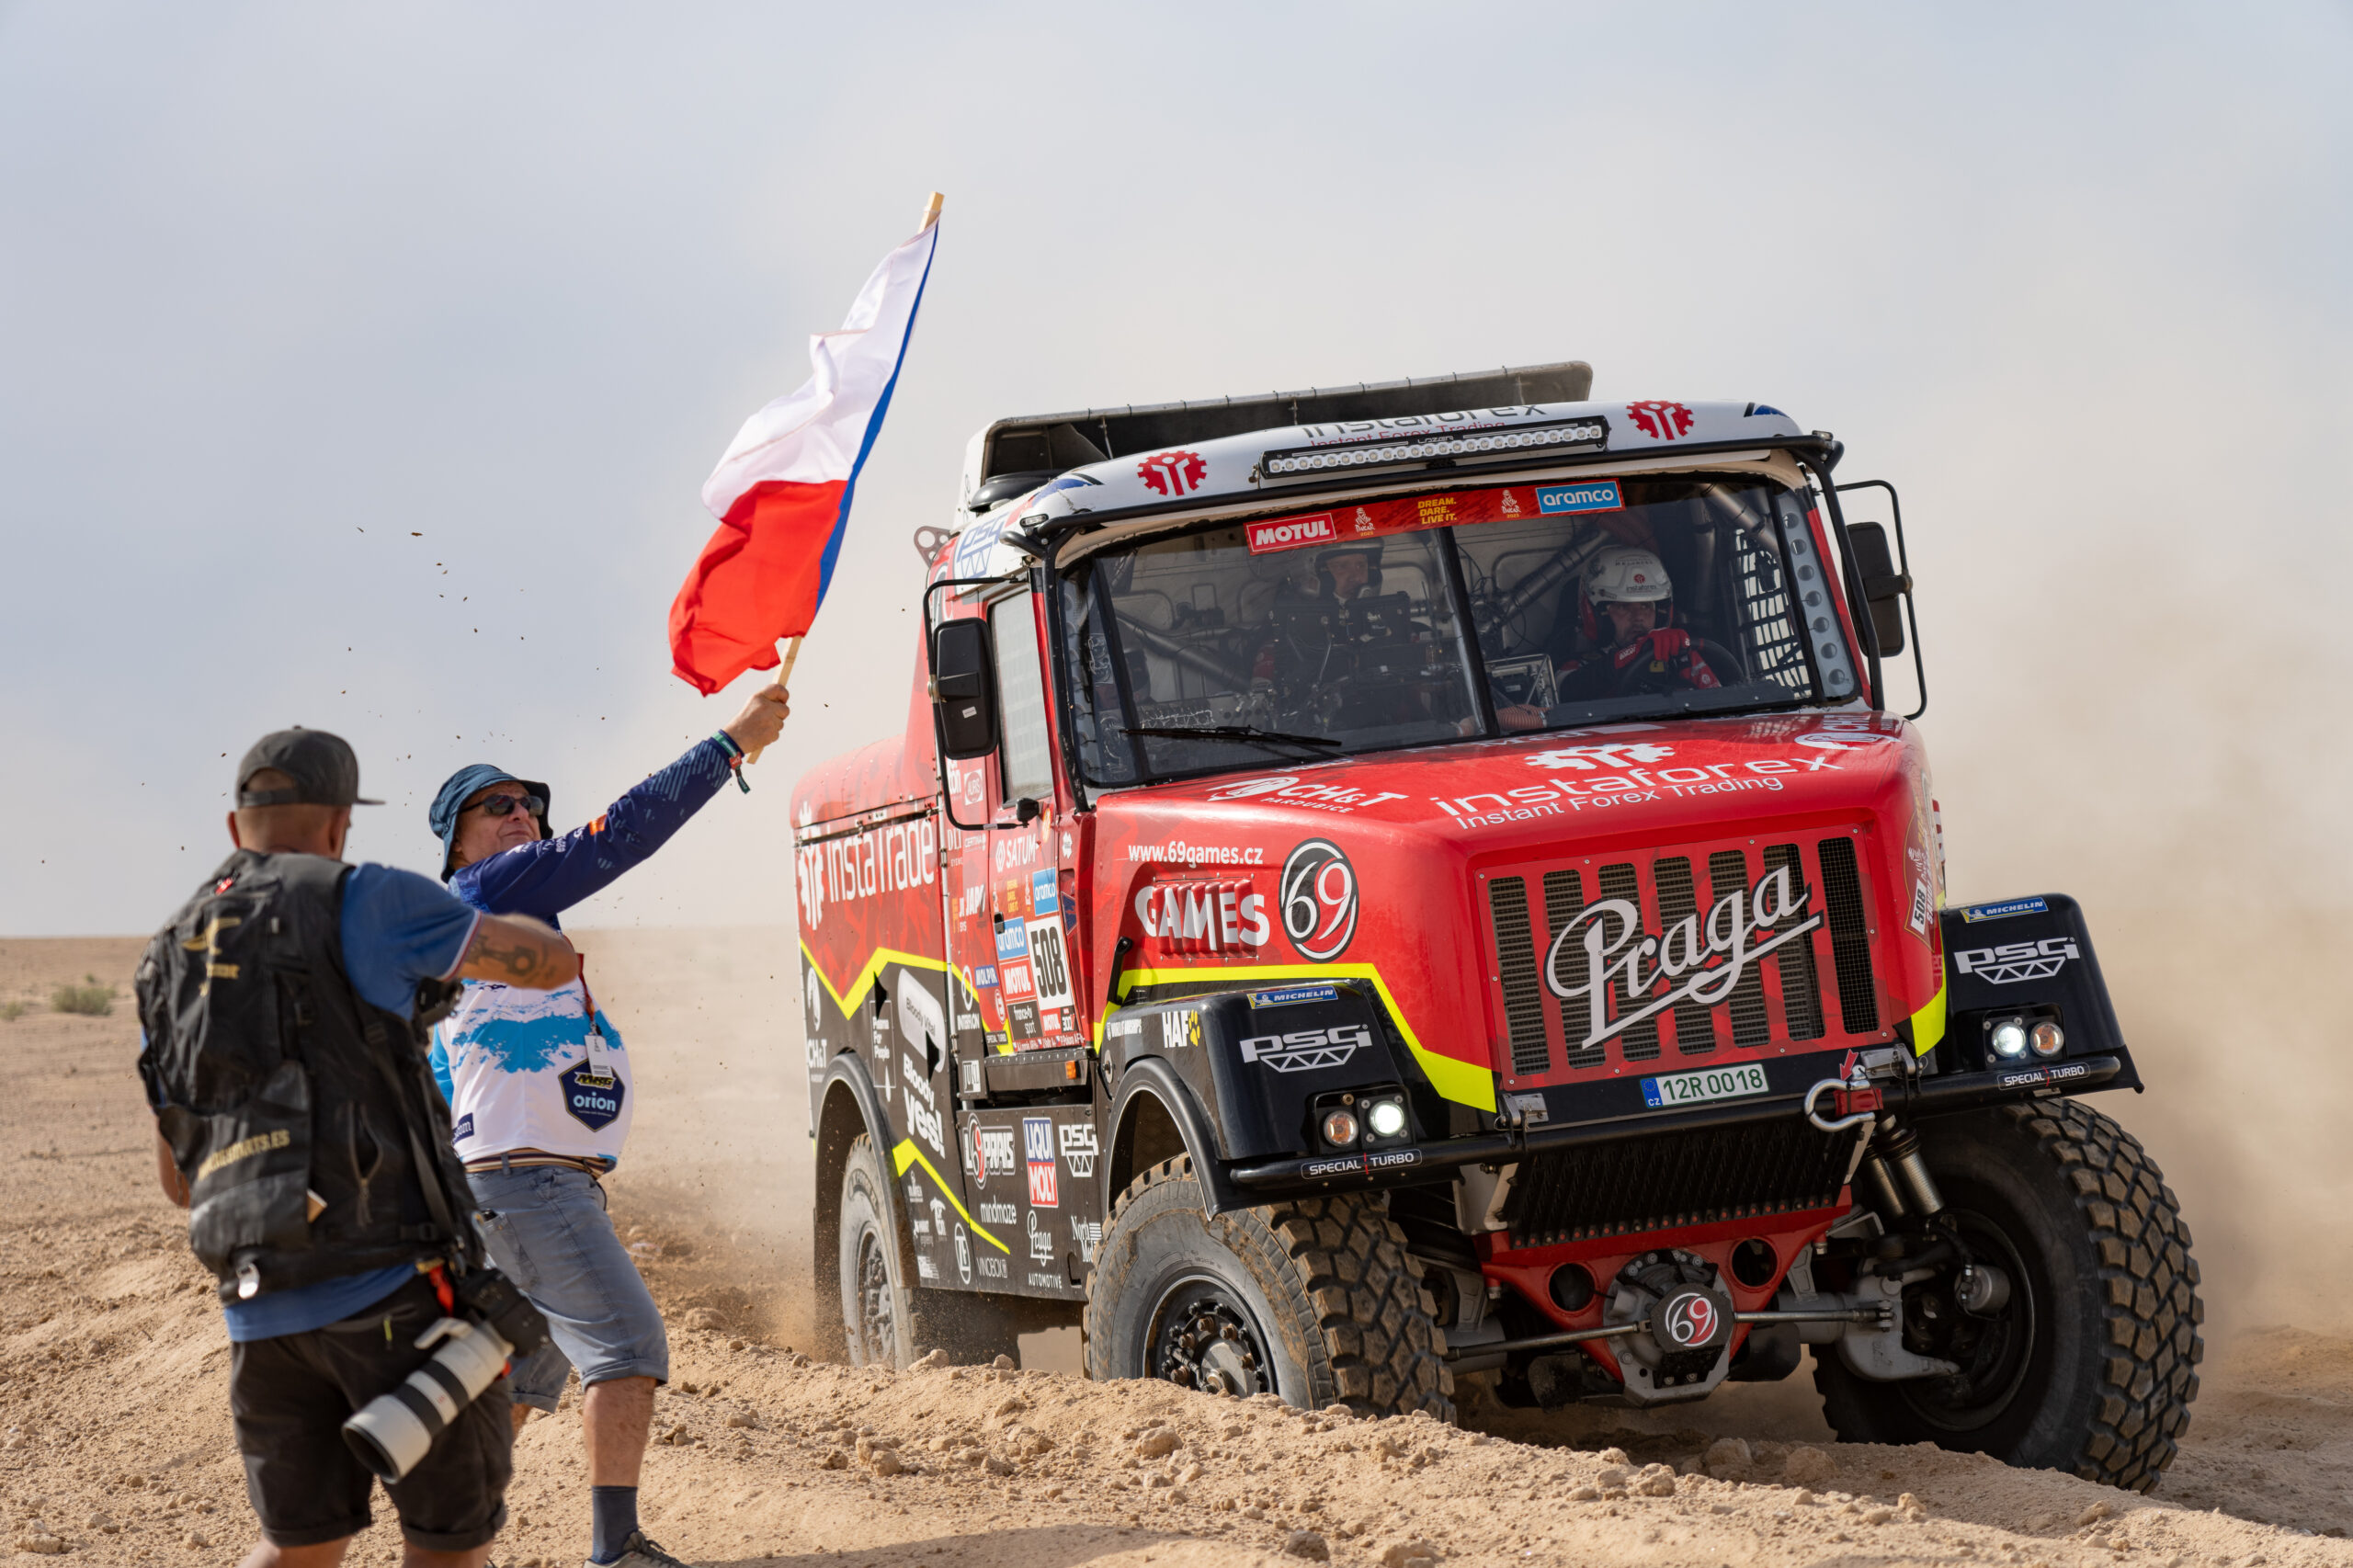 Praga | Dakar 2023: Aleš Loprais takes the lead after Stage 2 victory